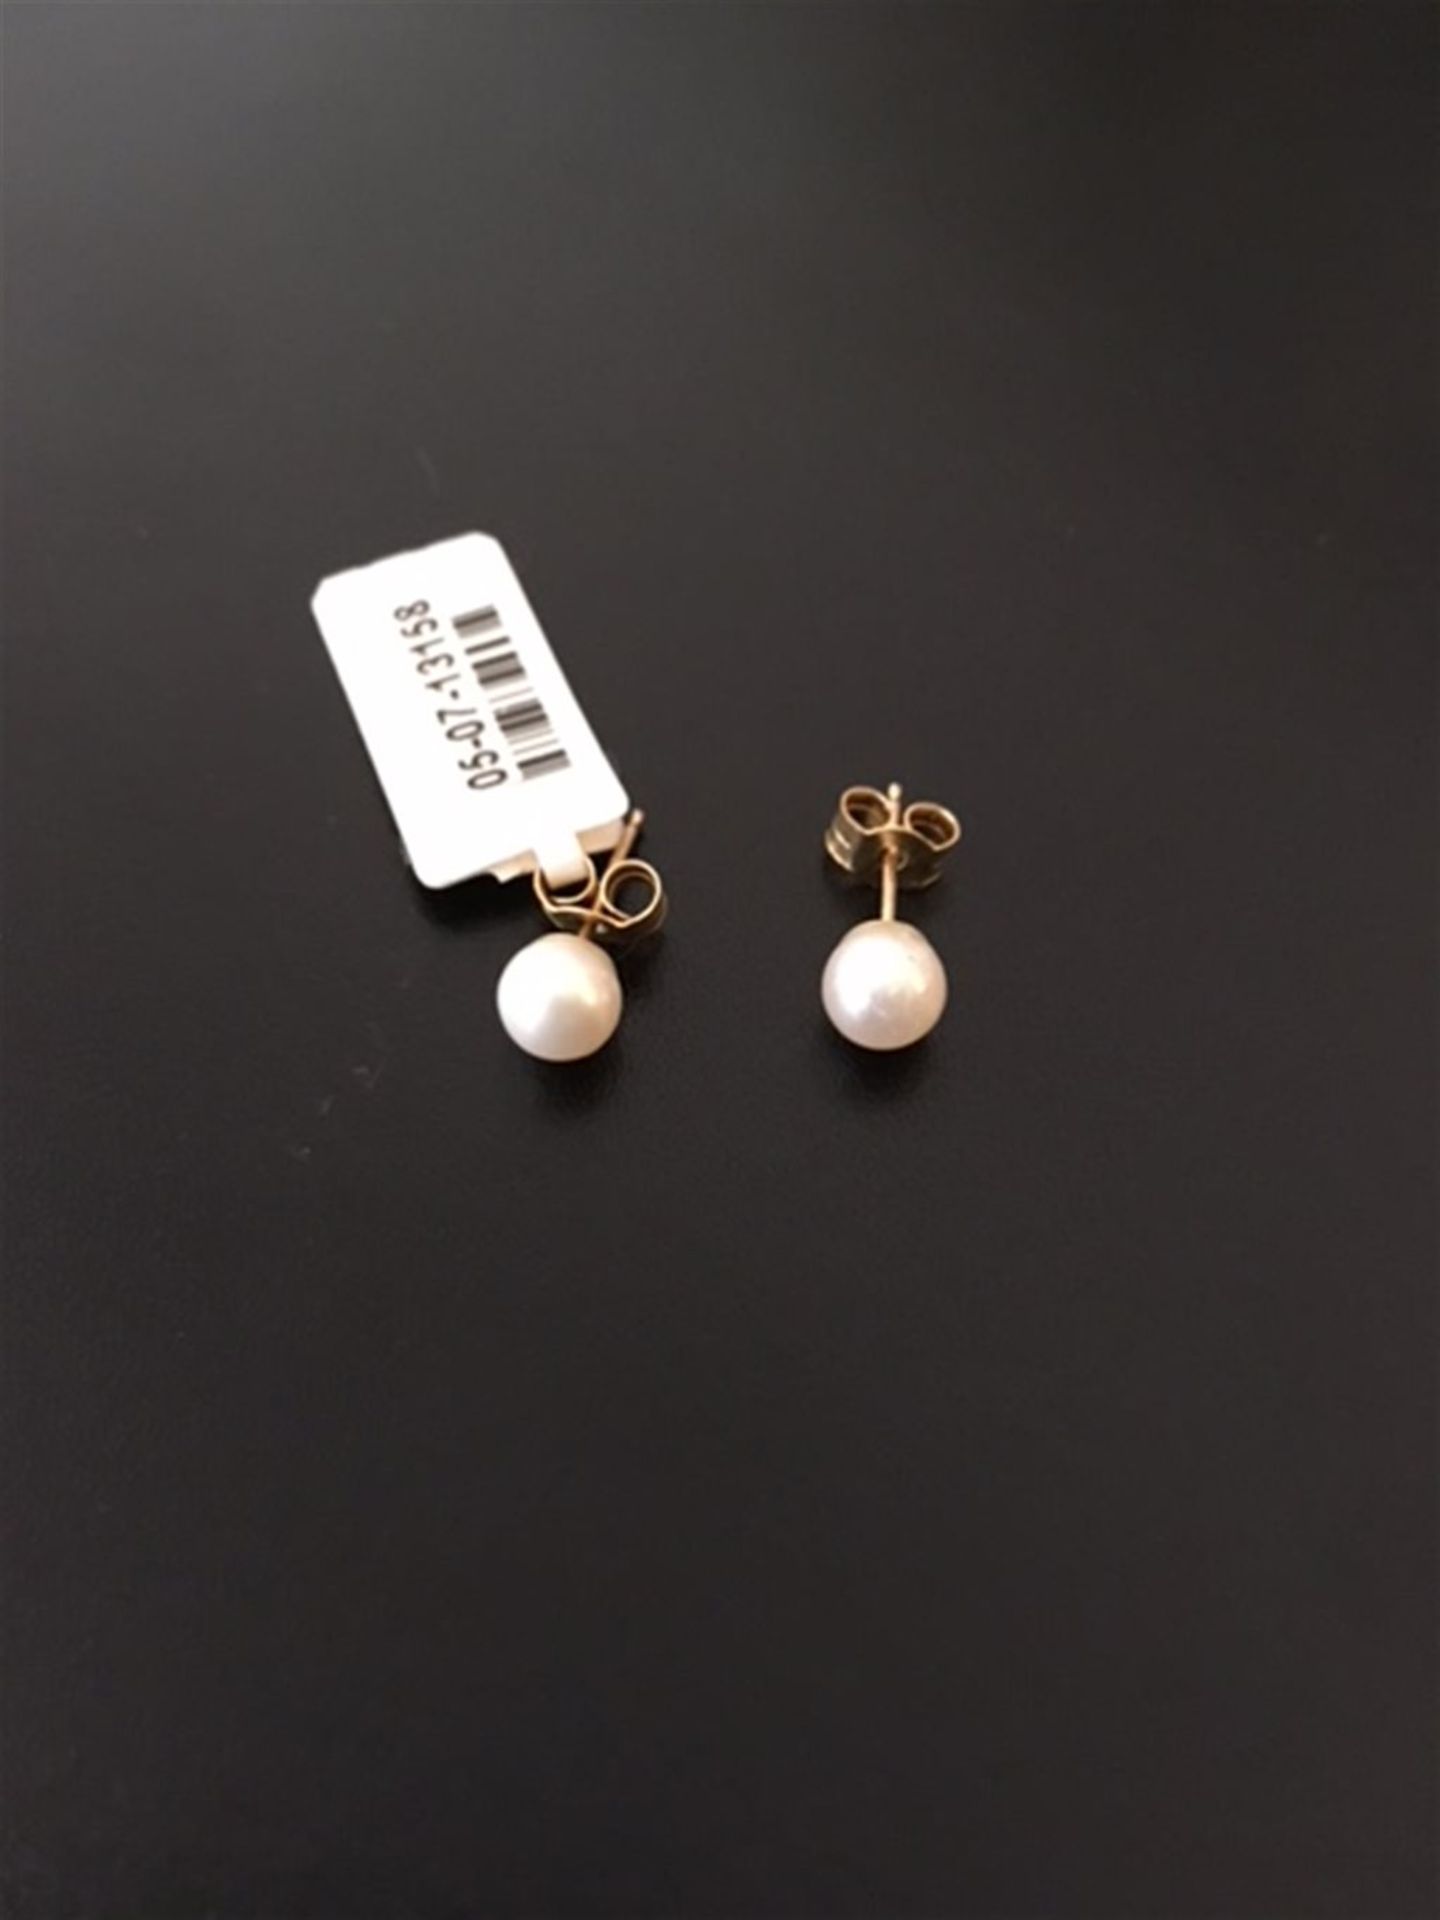 9ct yellow gold & pearl earrings